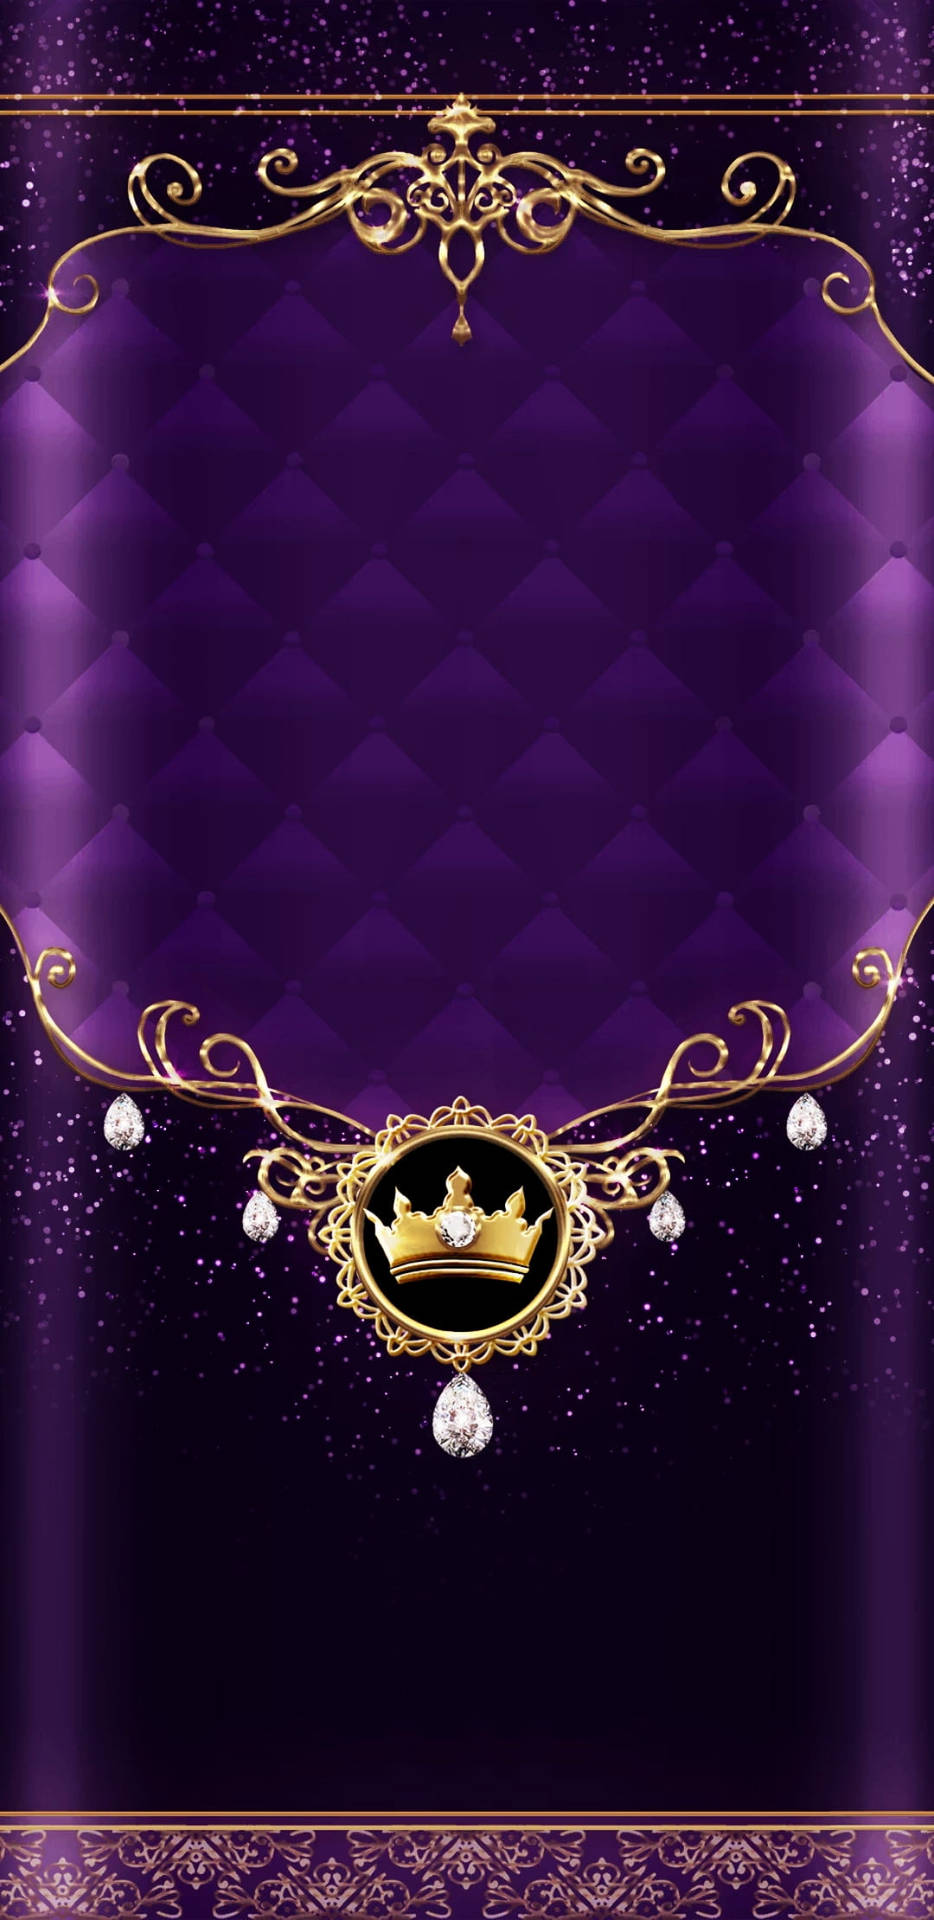 Royal Purple Queen Girly Wallpaper